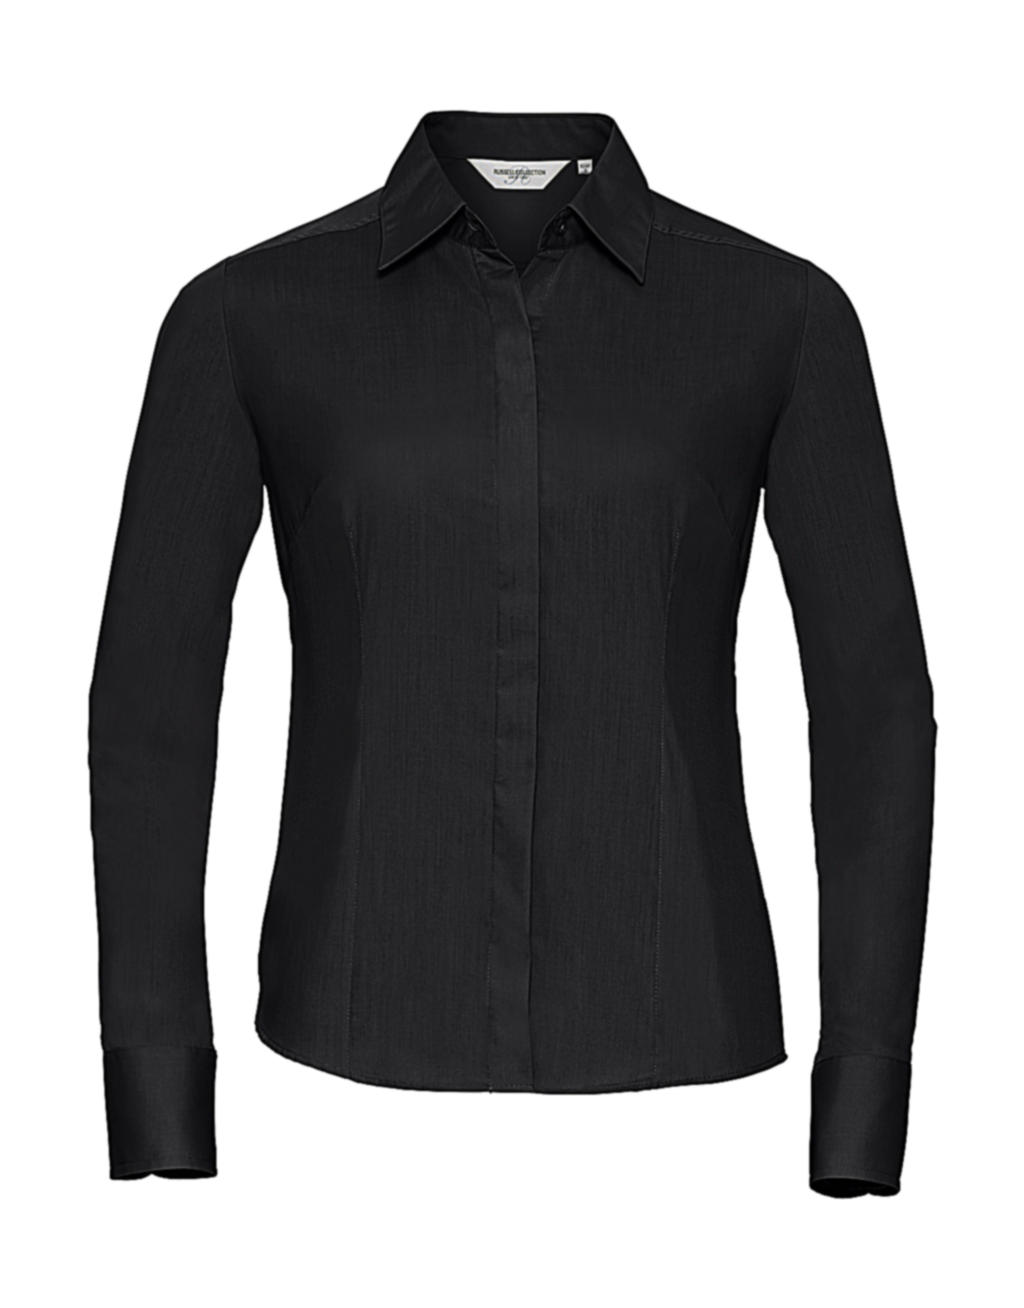  Ladies LS Fitted Poplin Shirt in Farbe Black